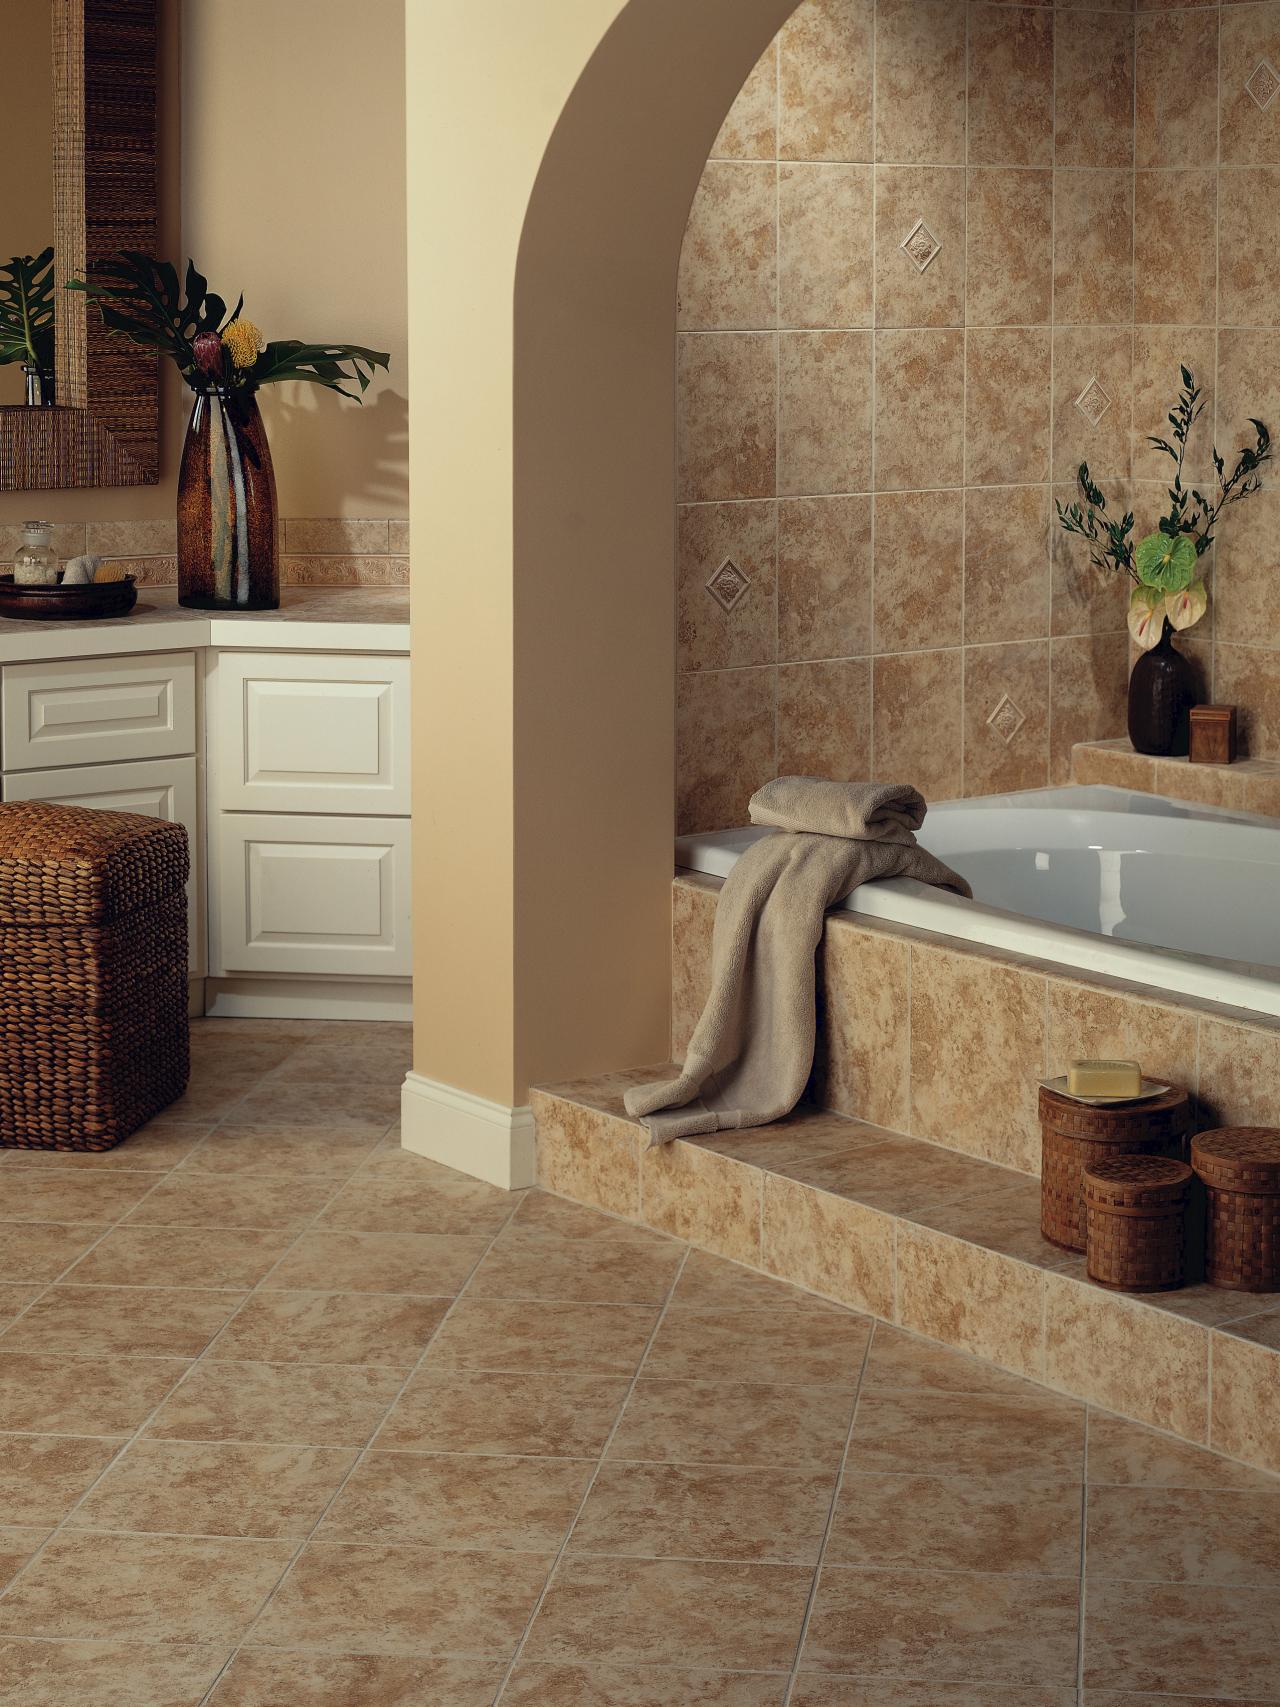 Why Homeowners Love Ceramic Tile | HGTV